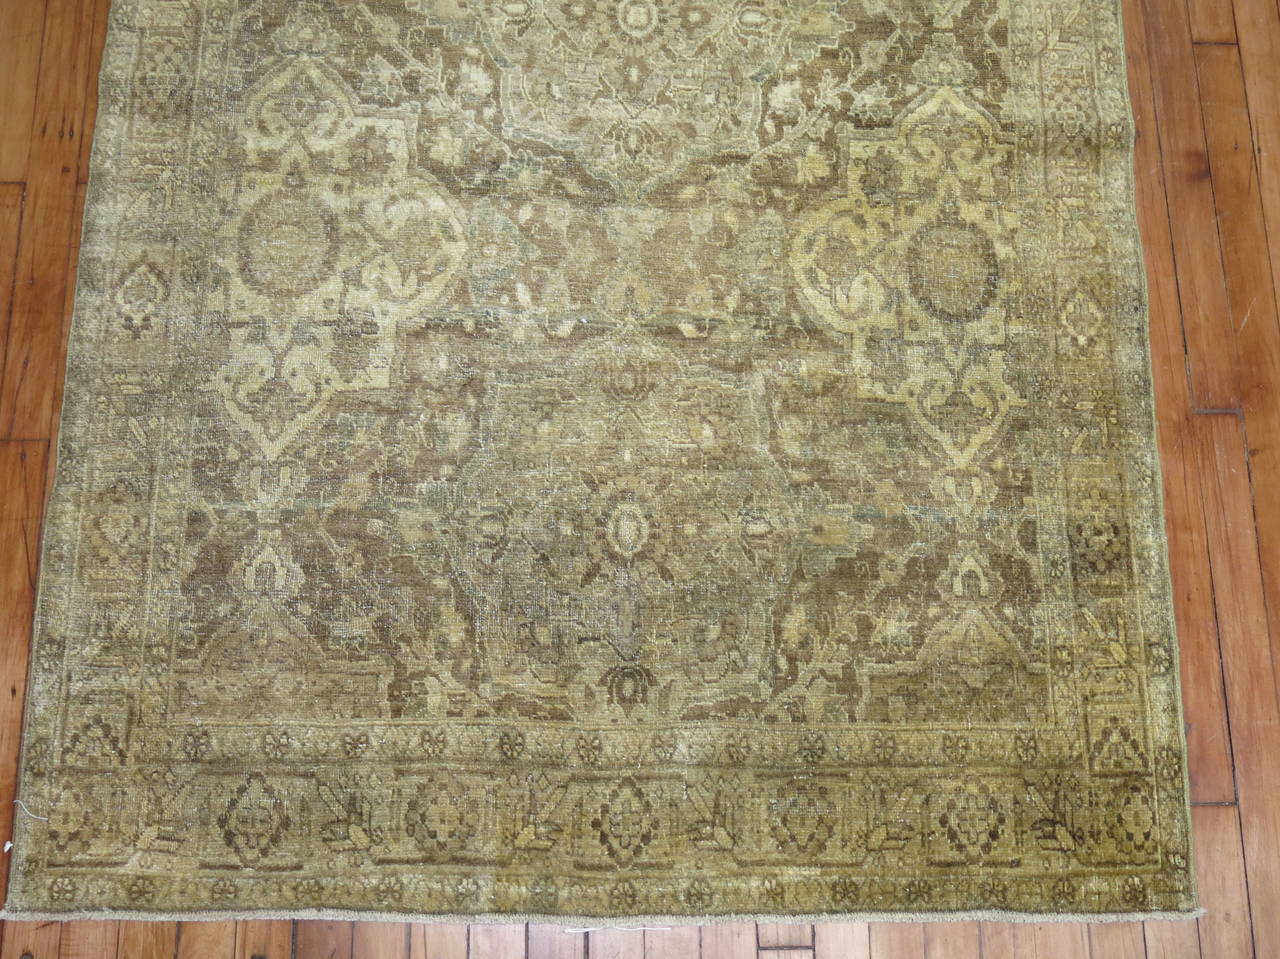 Early 20th century Persian Tabriz rug. Gold, khaki, brown.

4' x 5'4''